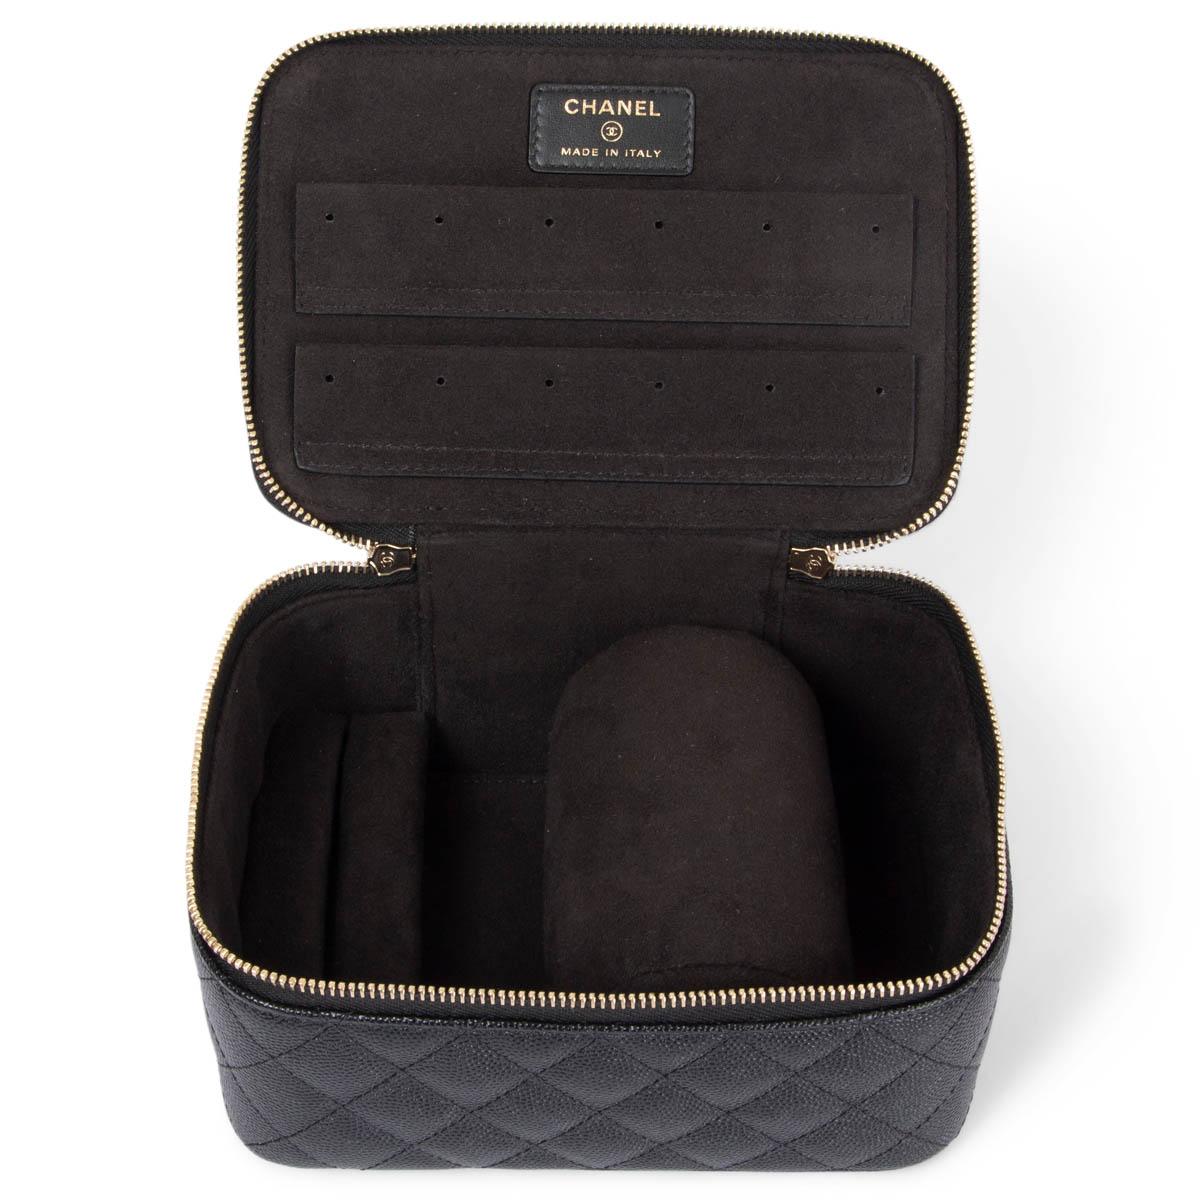 CHANEL black Caviar leather 2020 20C JEWELLERY CASE Bag 4